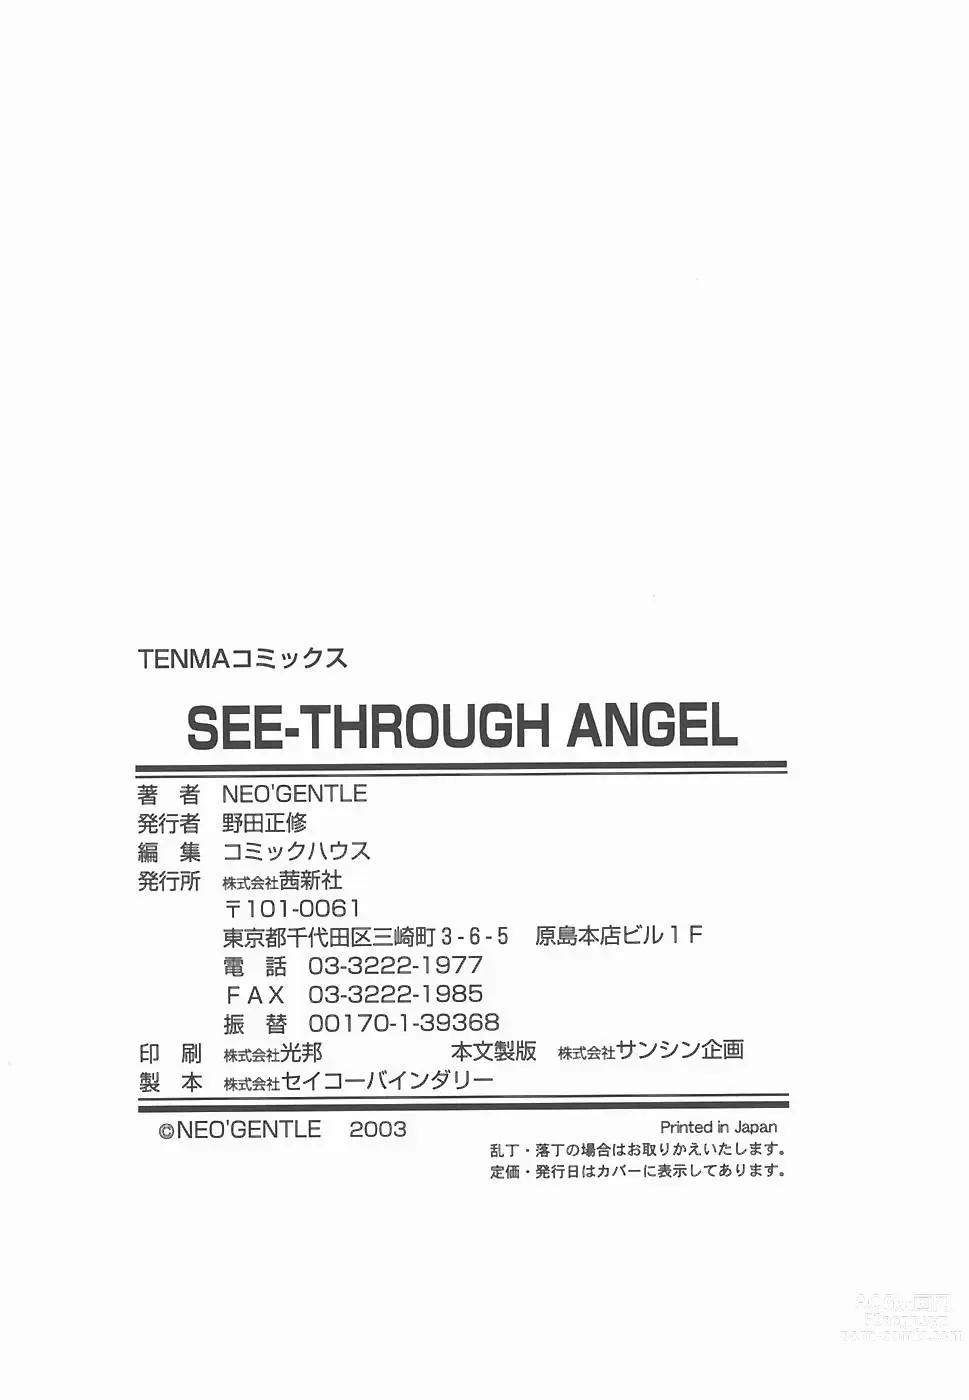 Page 181 of manga SEE-THROUGH ANGEL